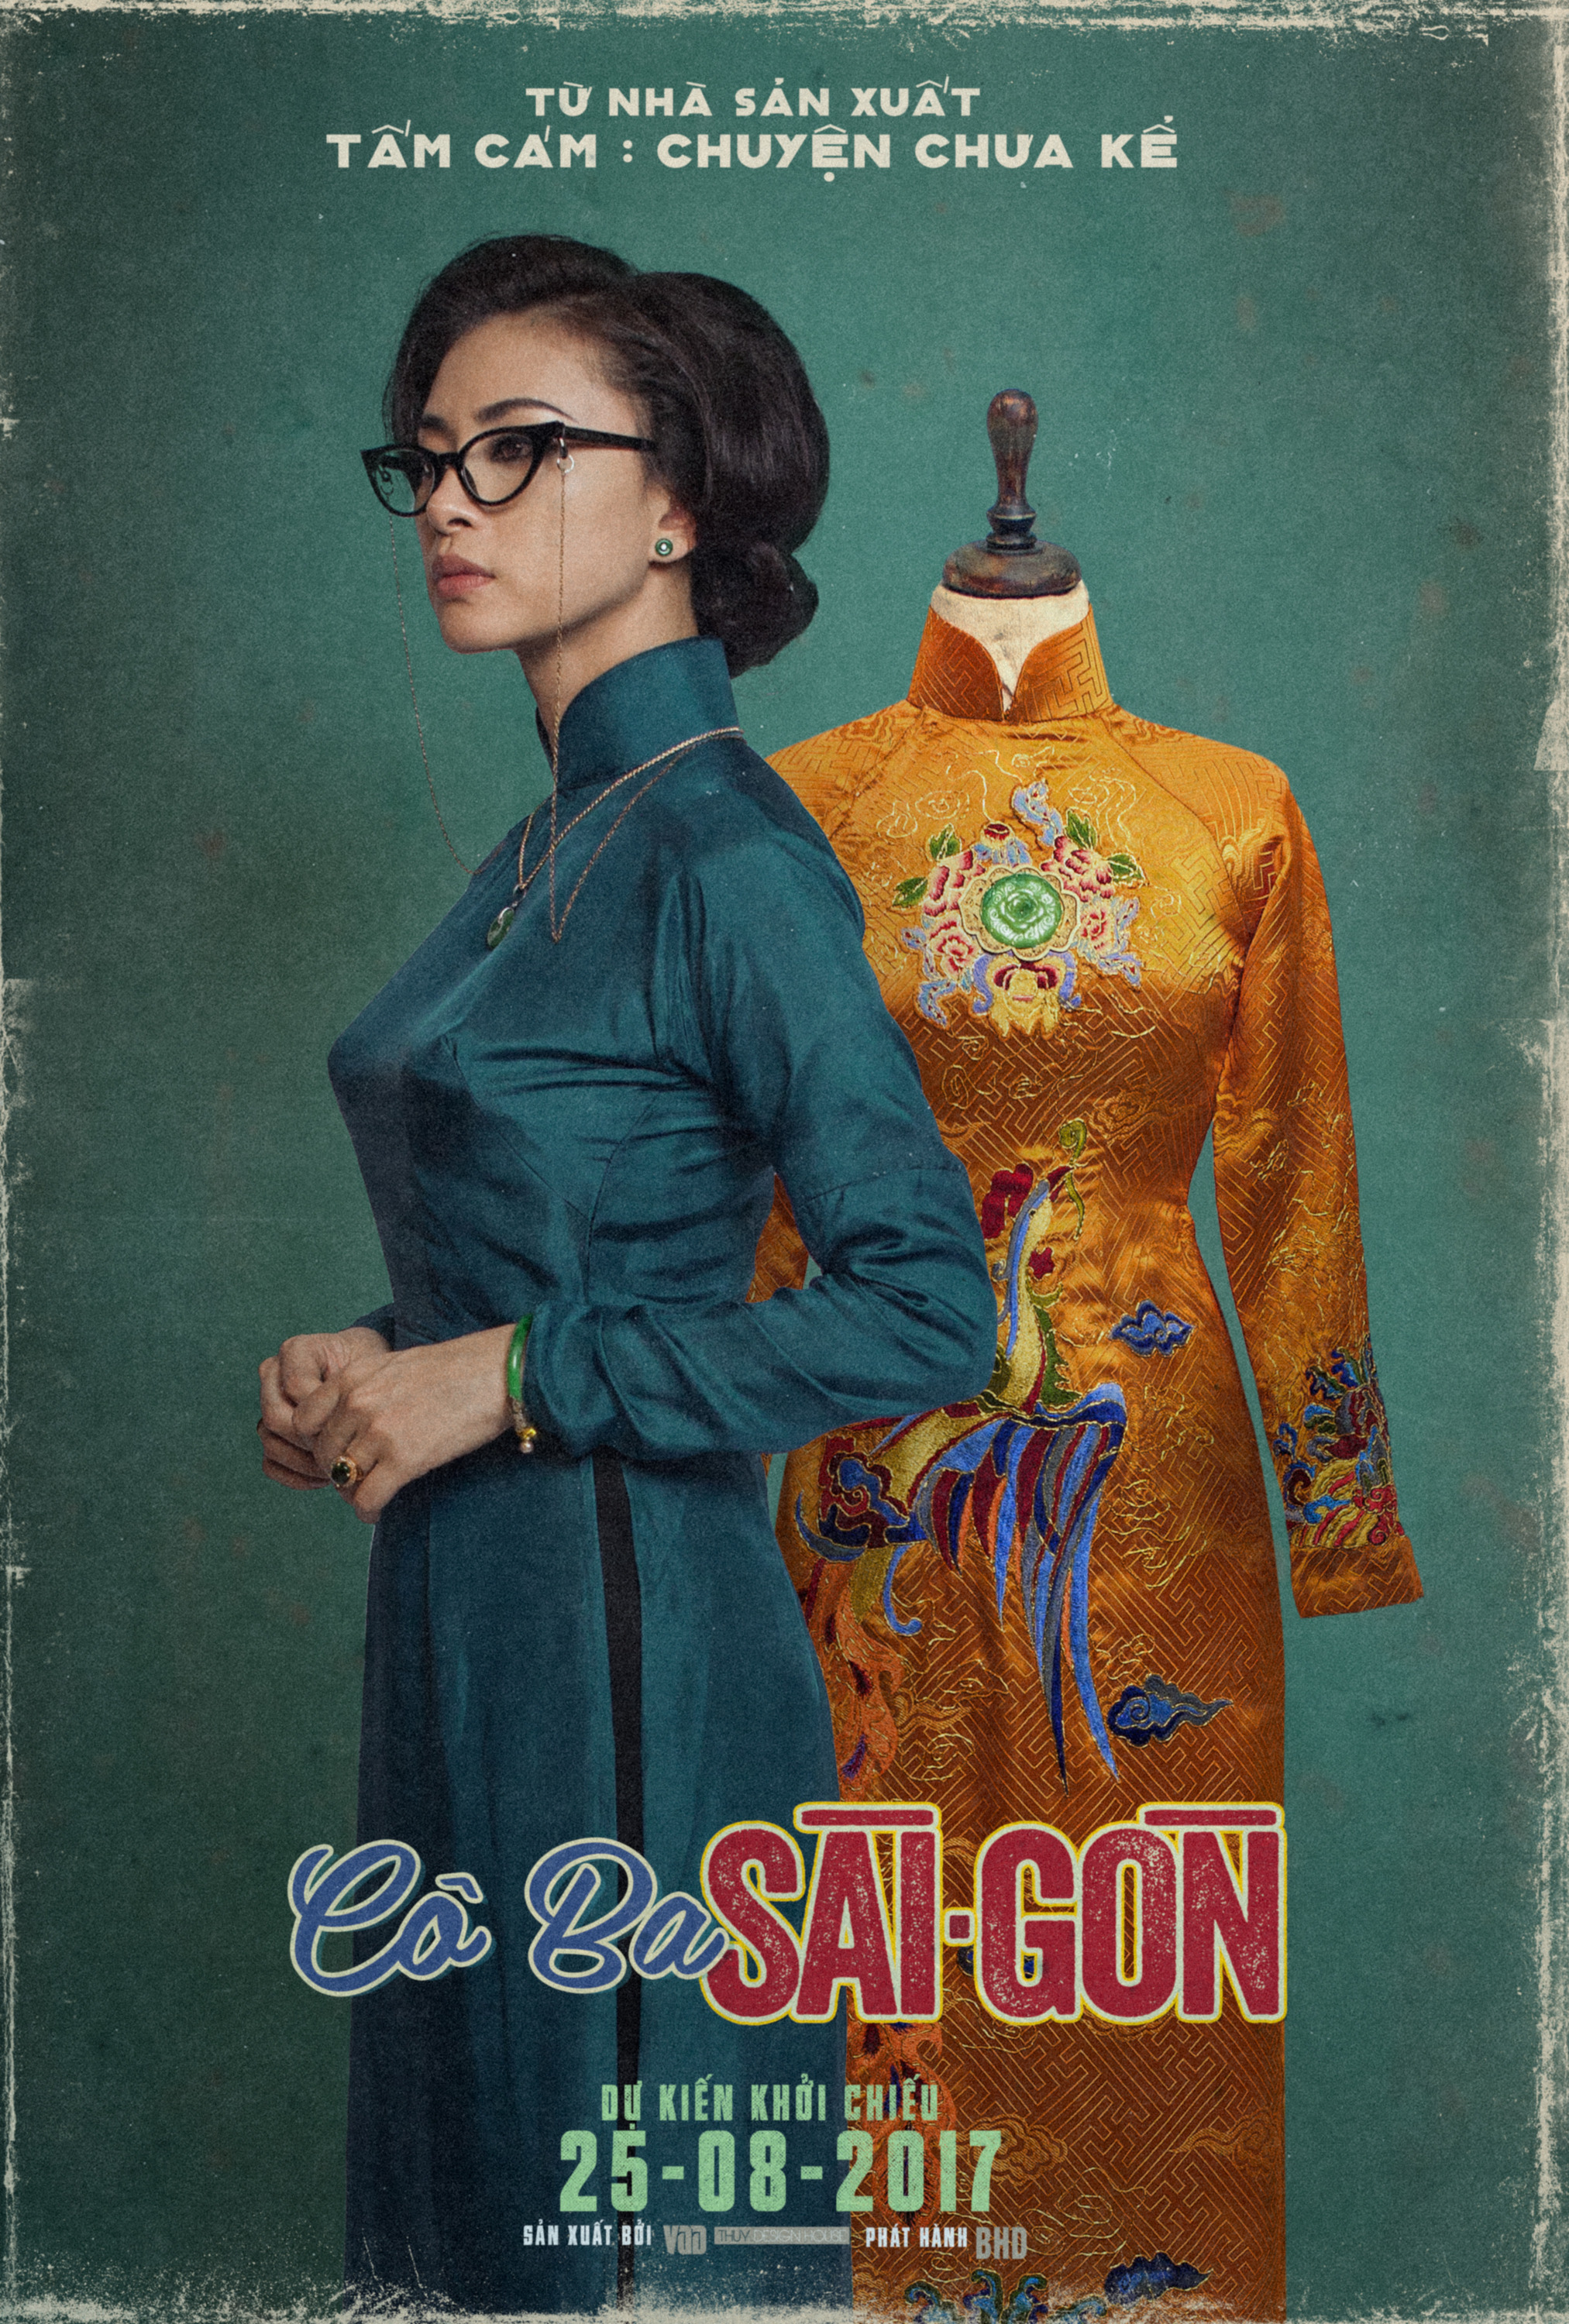 Mega Sized Movie Poster Image for Co Ba Sai Gon (#6 of 7)